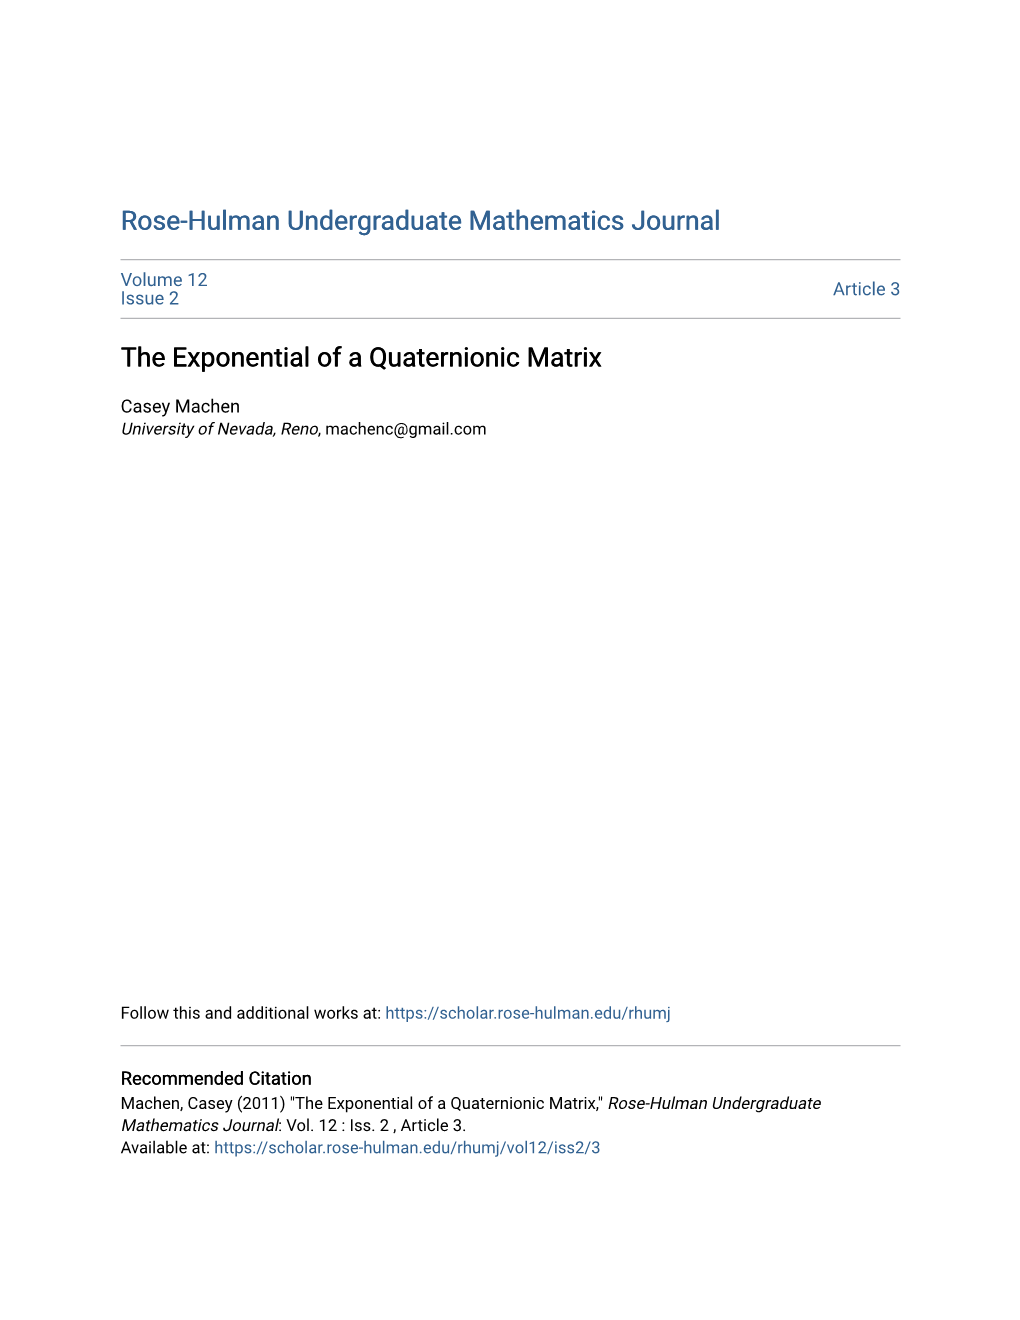 The Exponential of a Quaternionic Matrix